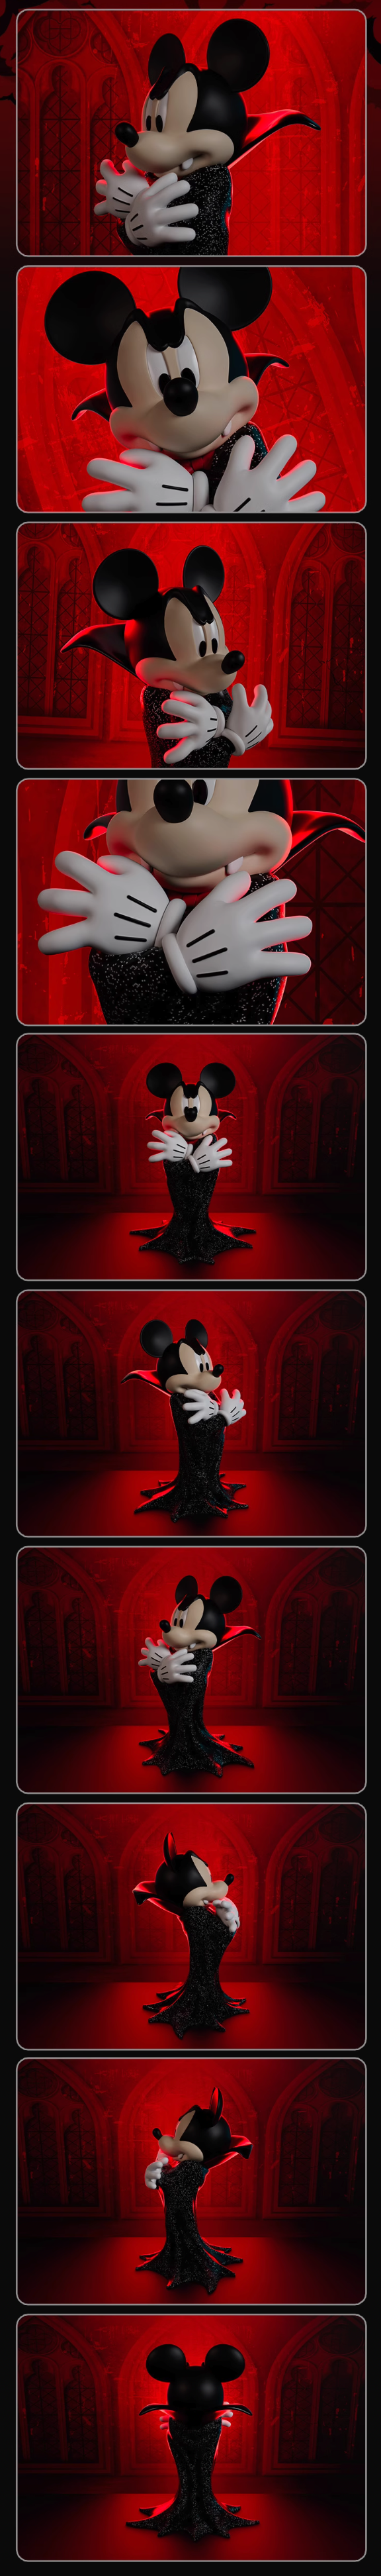 SOAP STUDIO 迪士尼 米奇老鼠系列 吸血鬼造型人偶